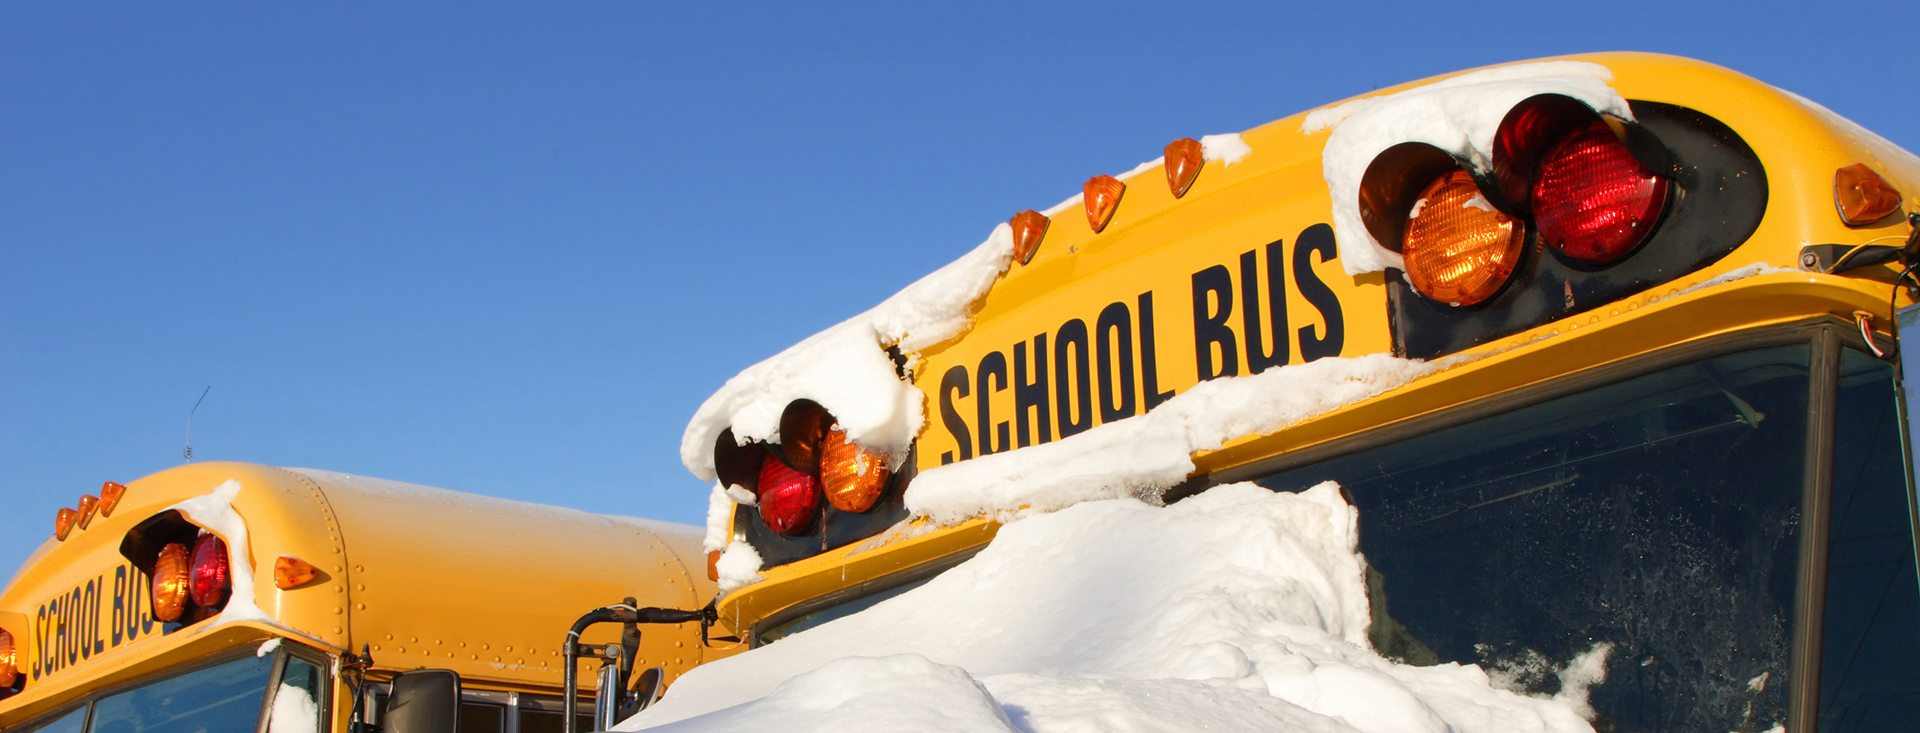 school bus with snow